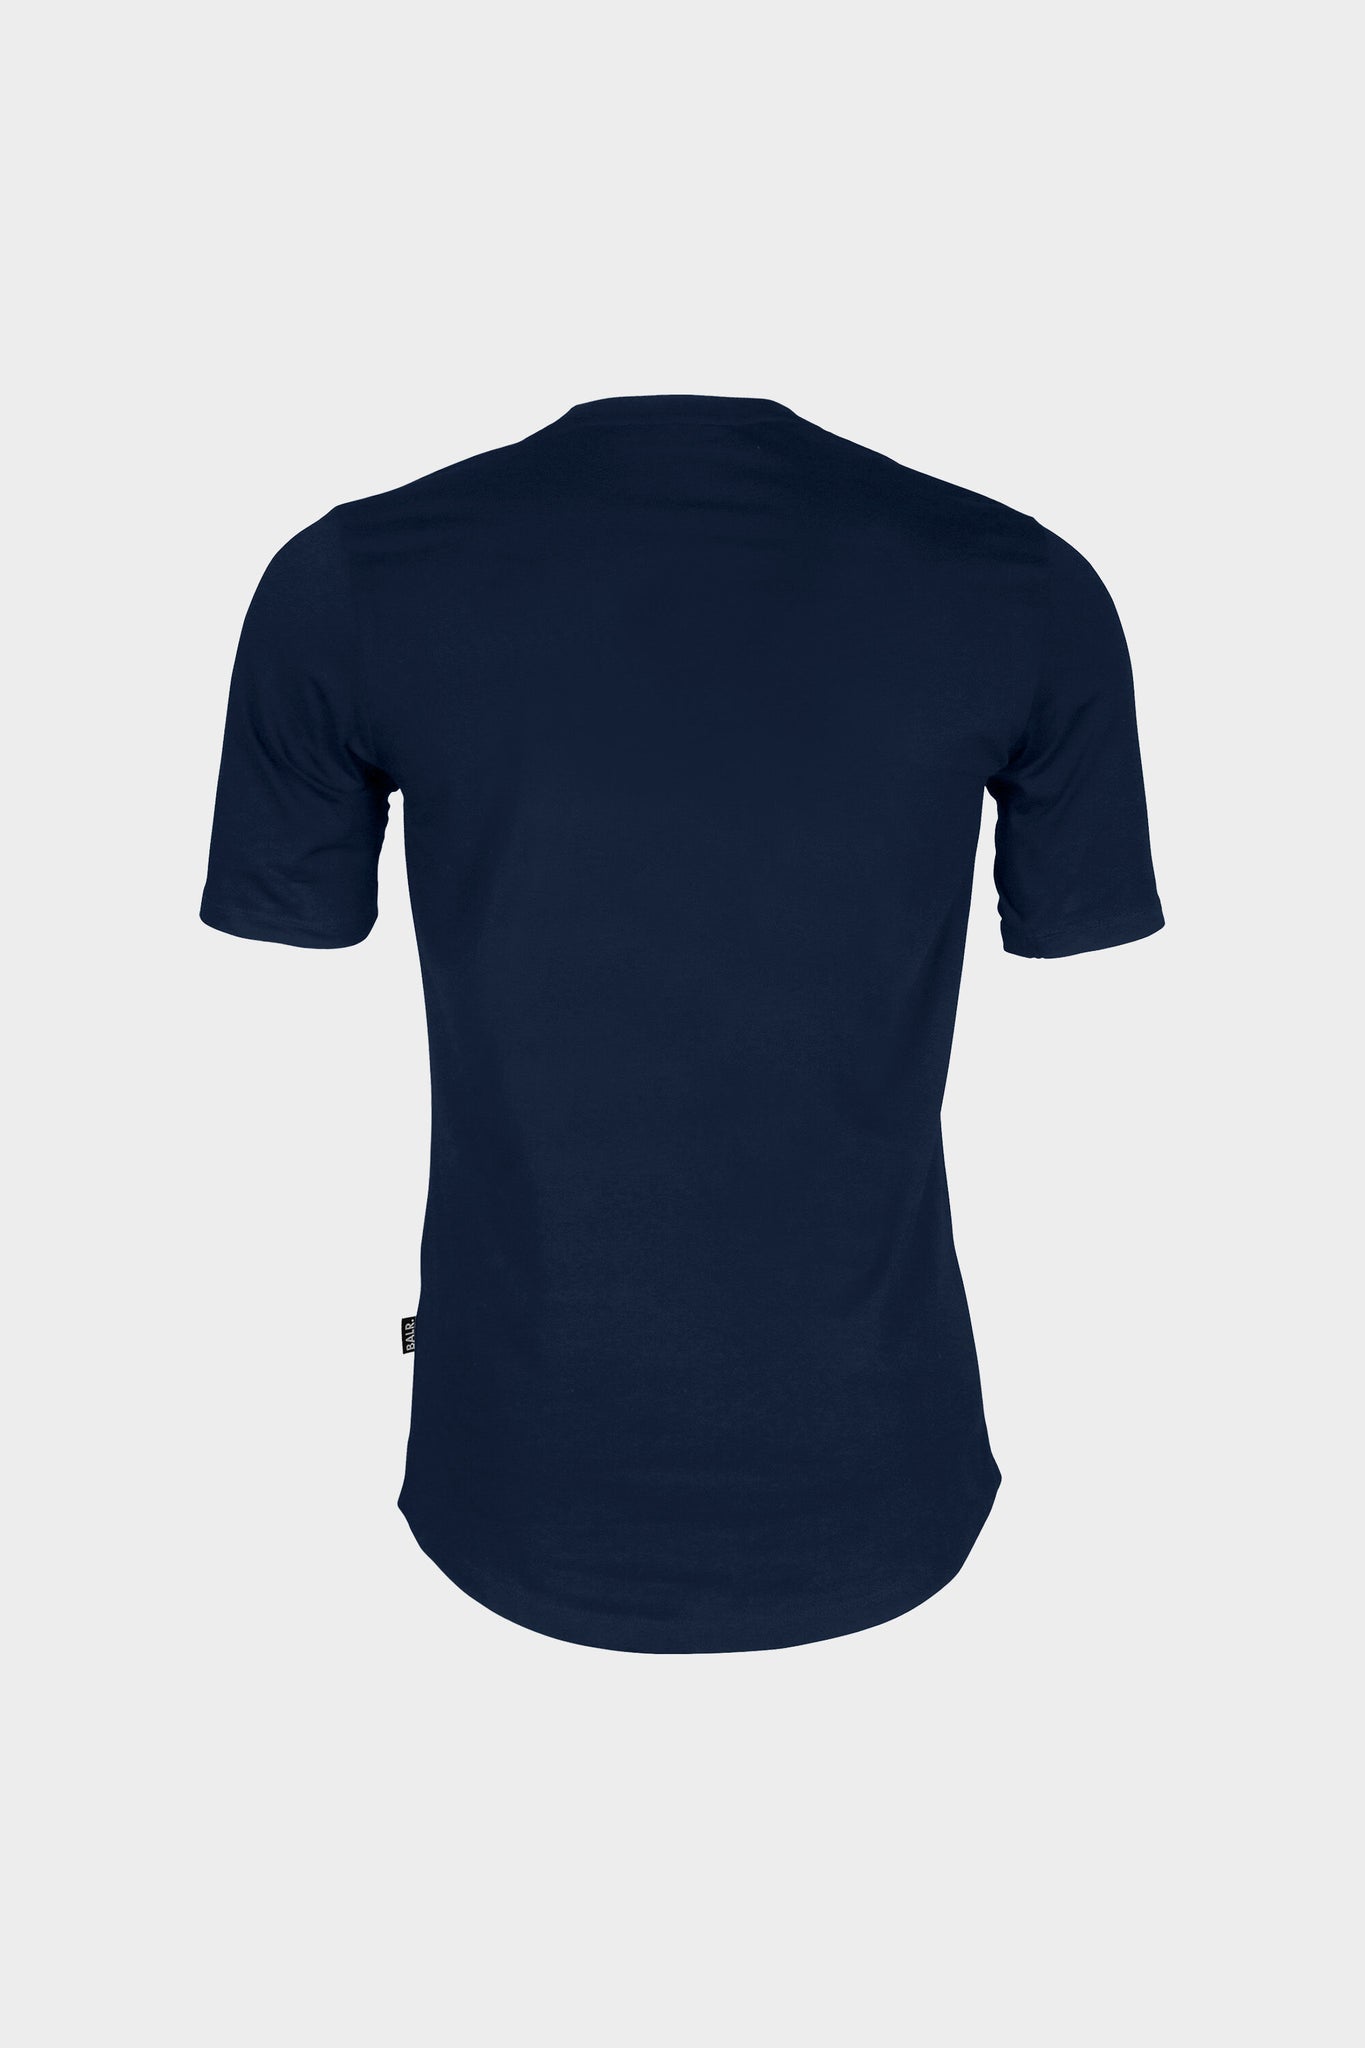 navy blue athletic shirt